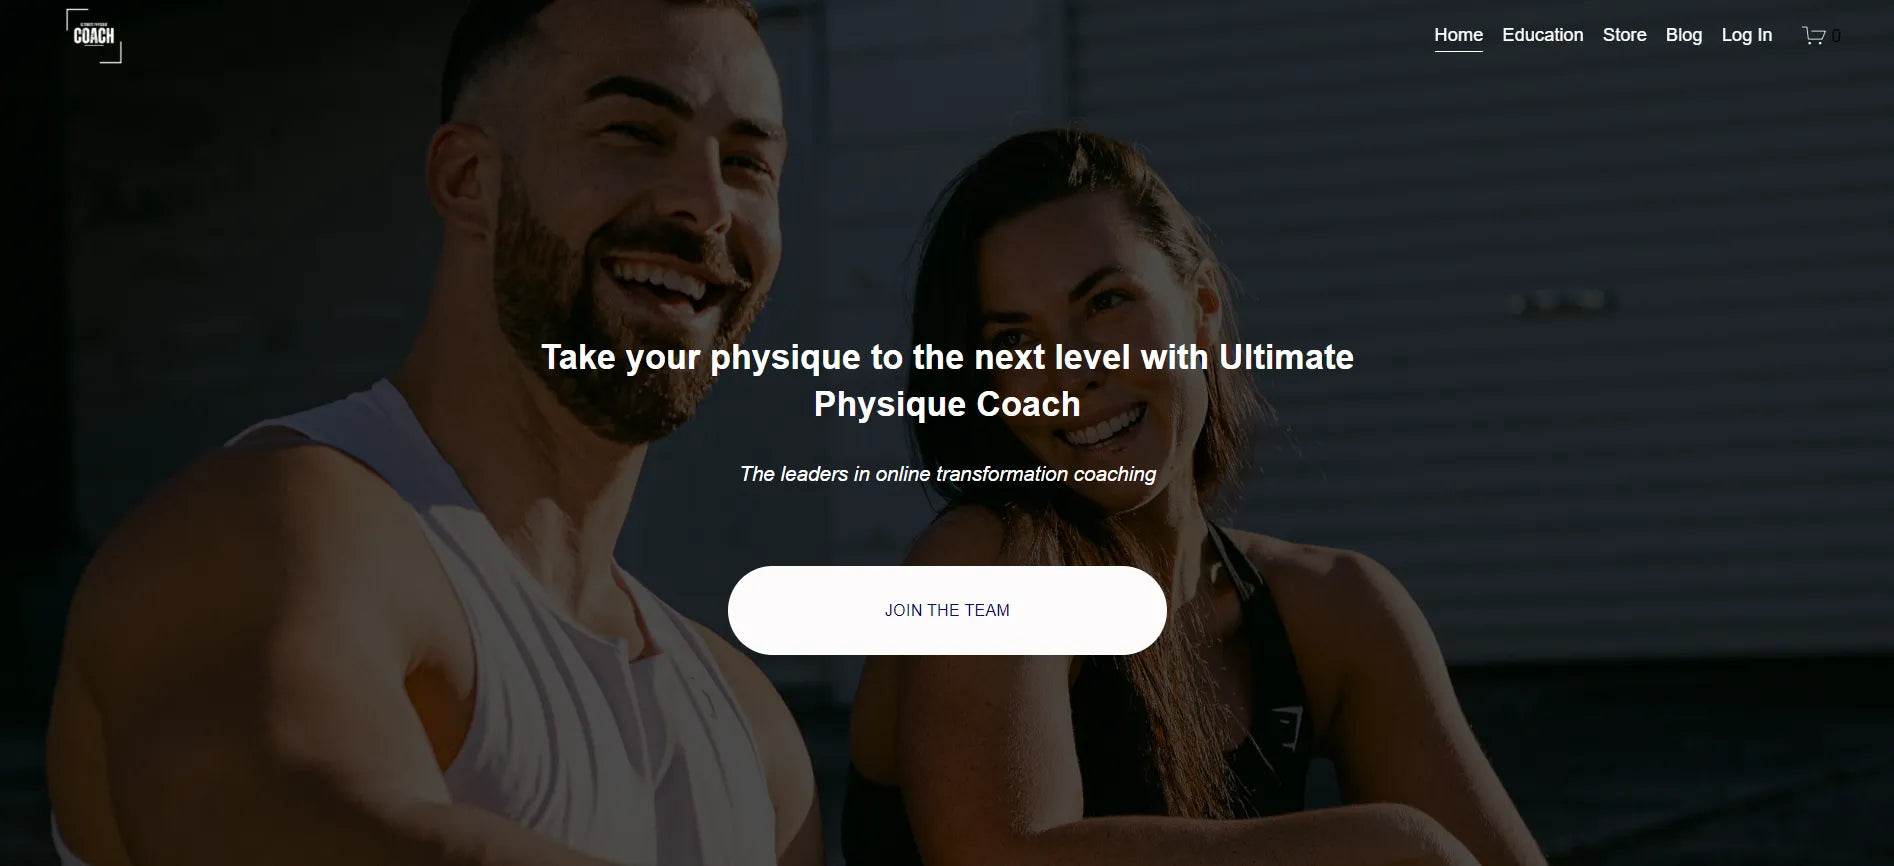 Ultimate Physique Coach’s headline and subheadline